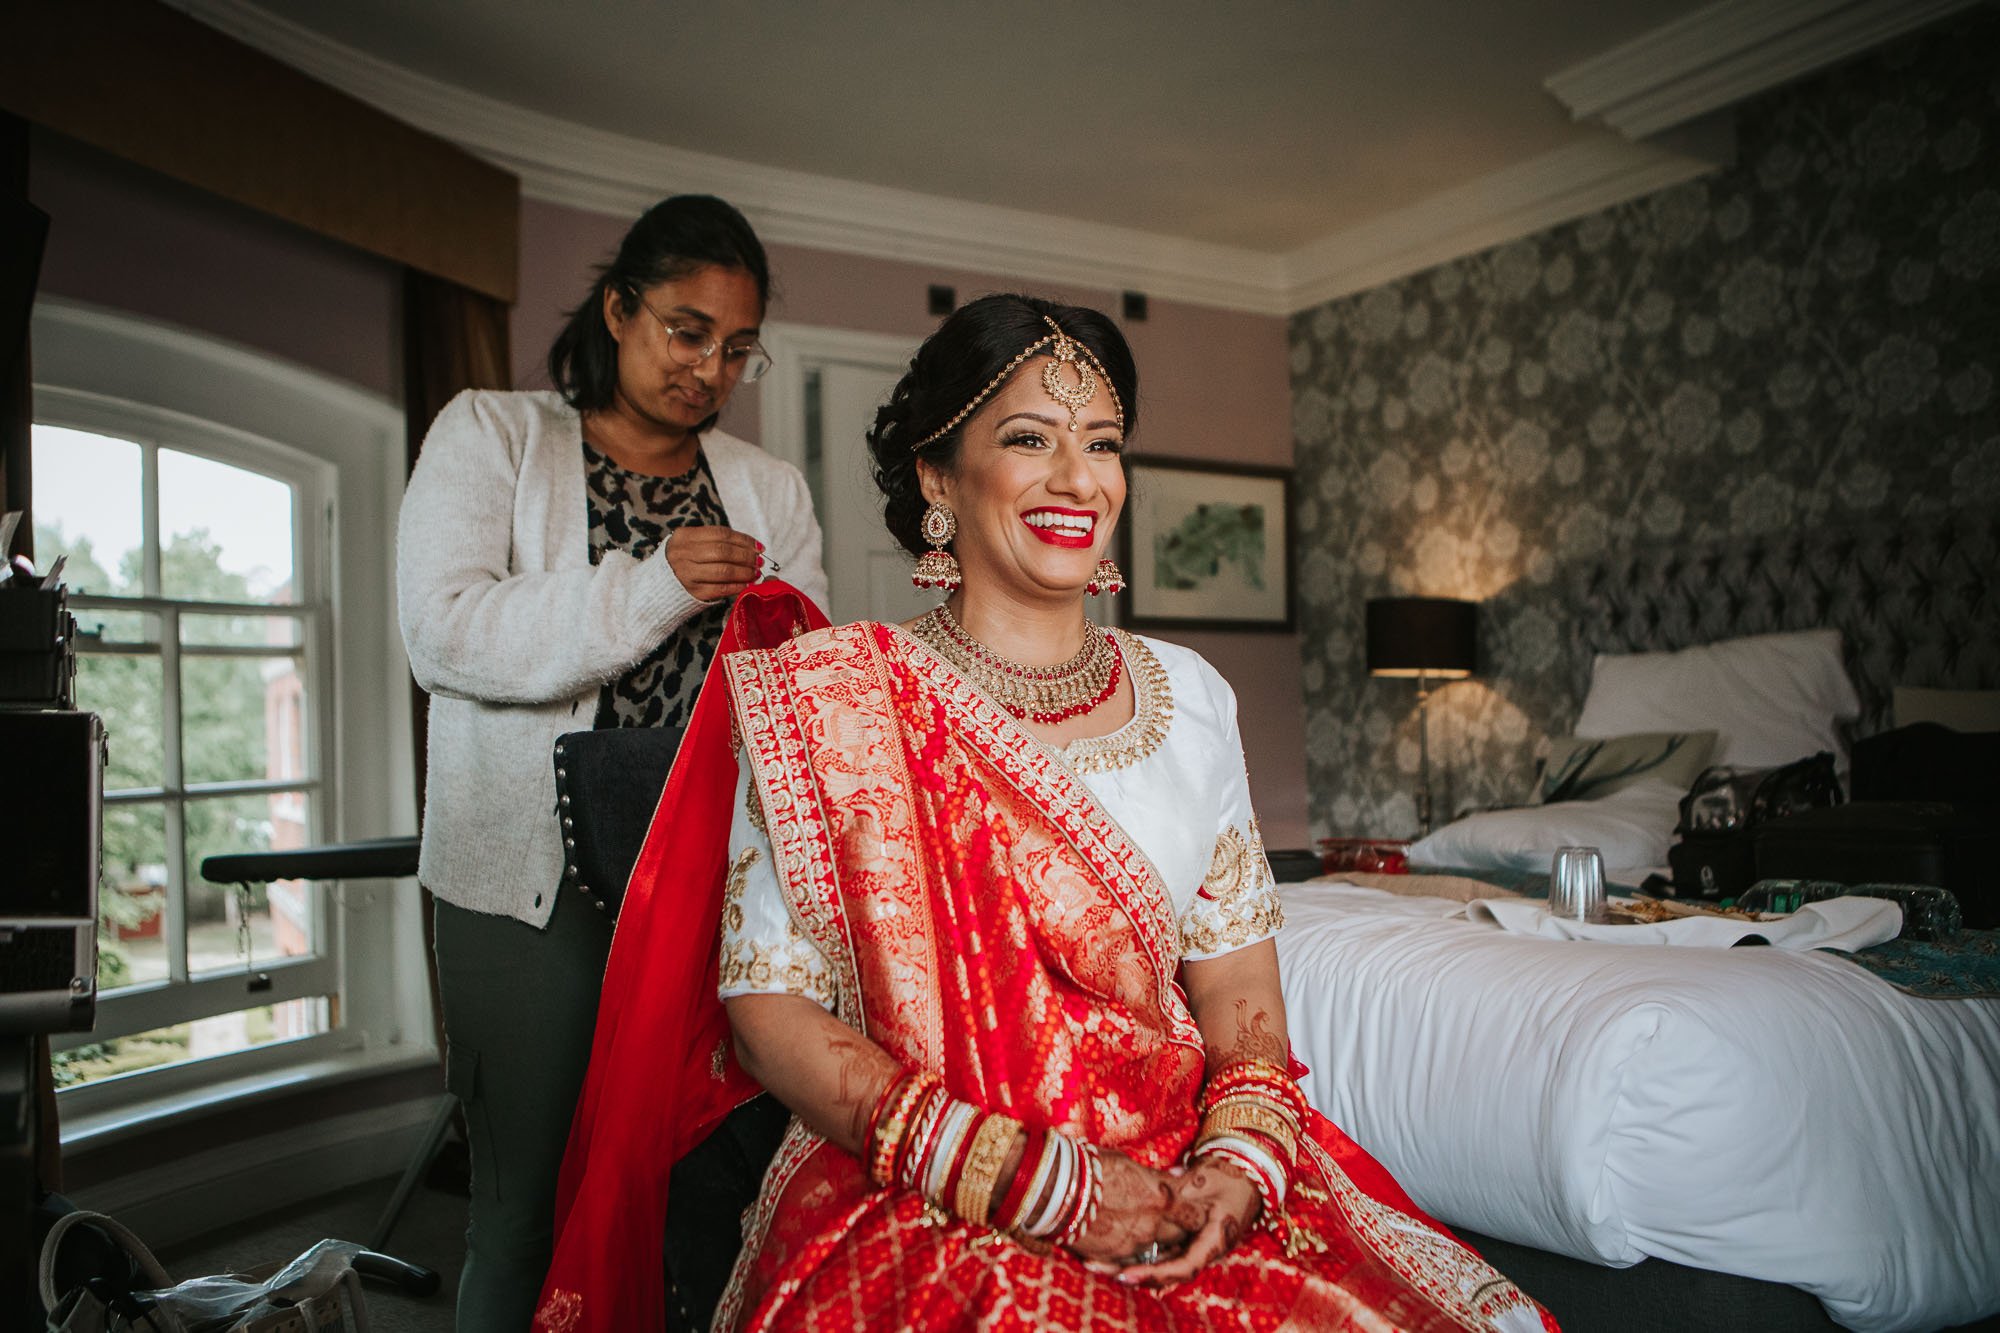 Smiling Hindu Bride dressed in traditional red sari.